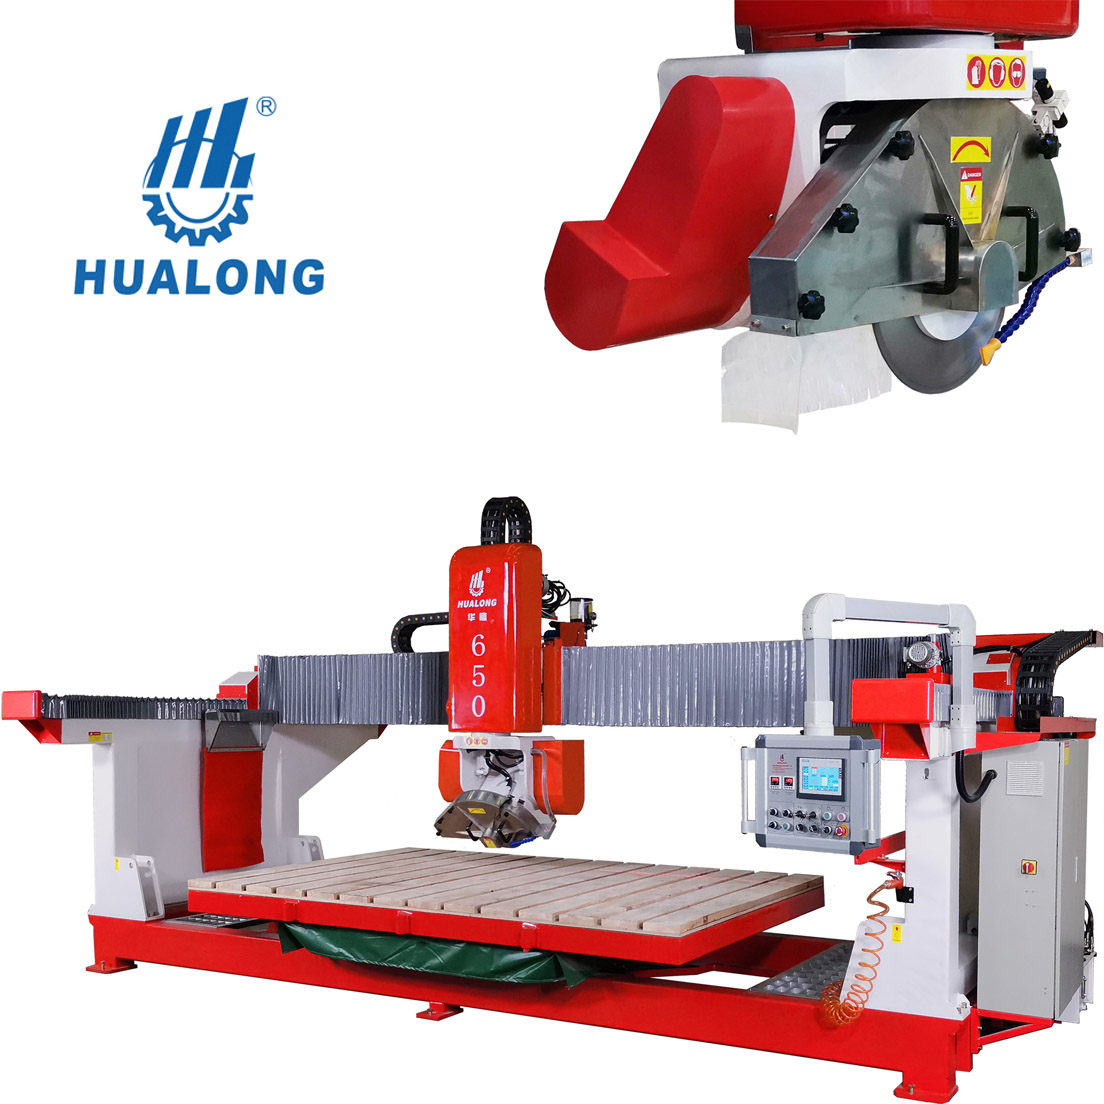 Hualong stone machinery HLSQ-650 automatic 5 Axis CNC bridge saw machine granite, marble, quartzite ,artifical stone cutting machine manufacturers